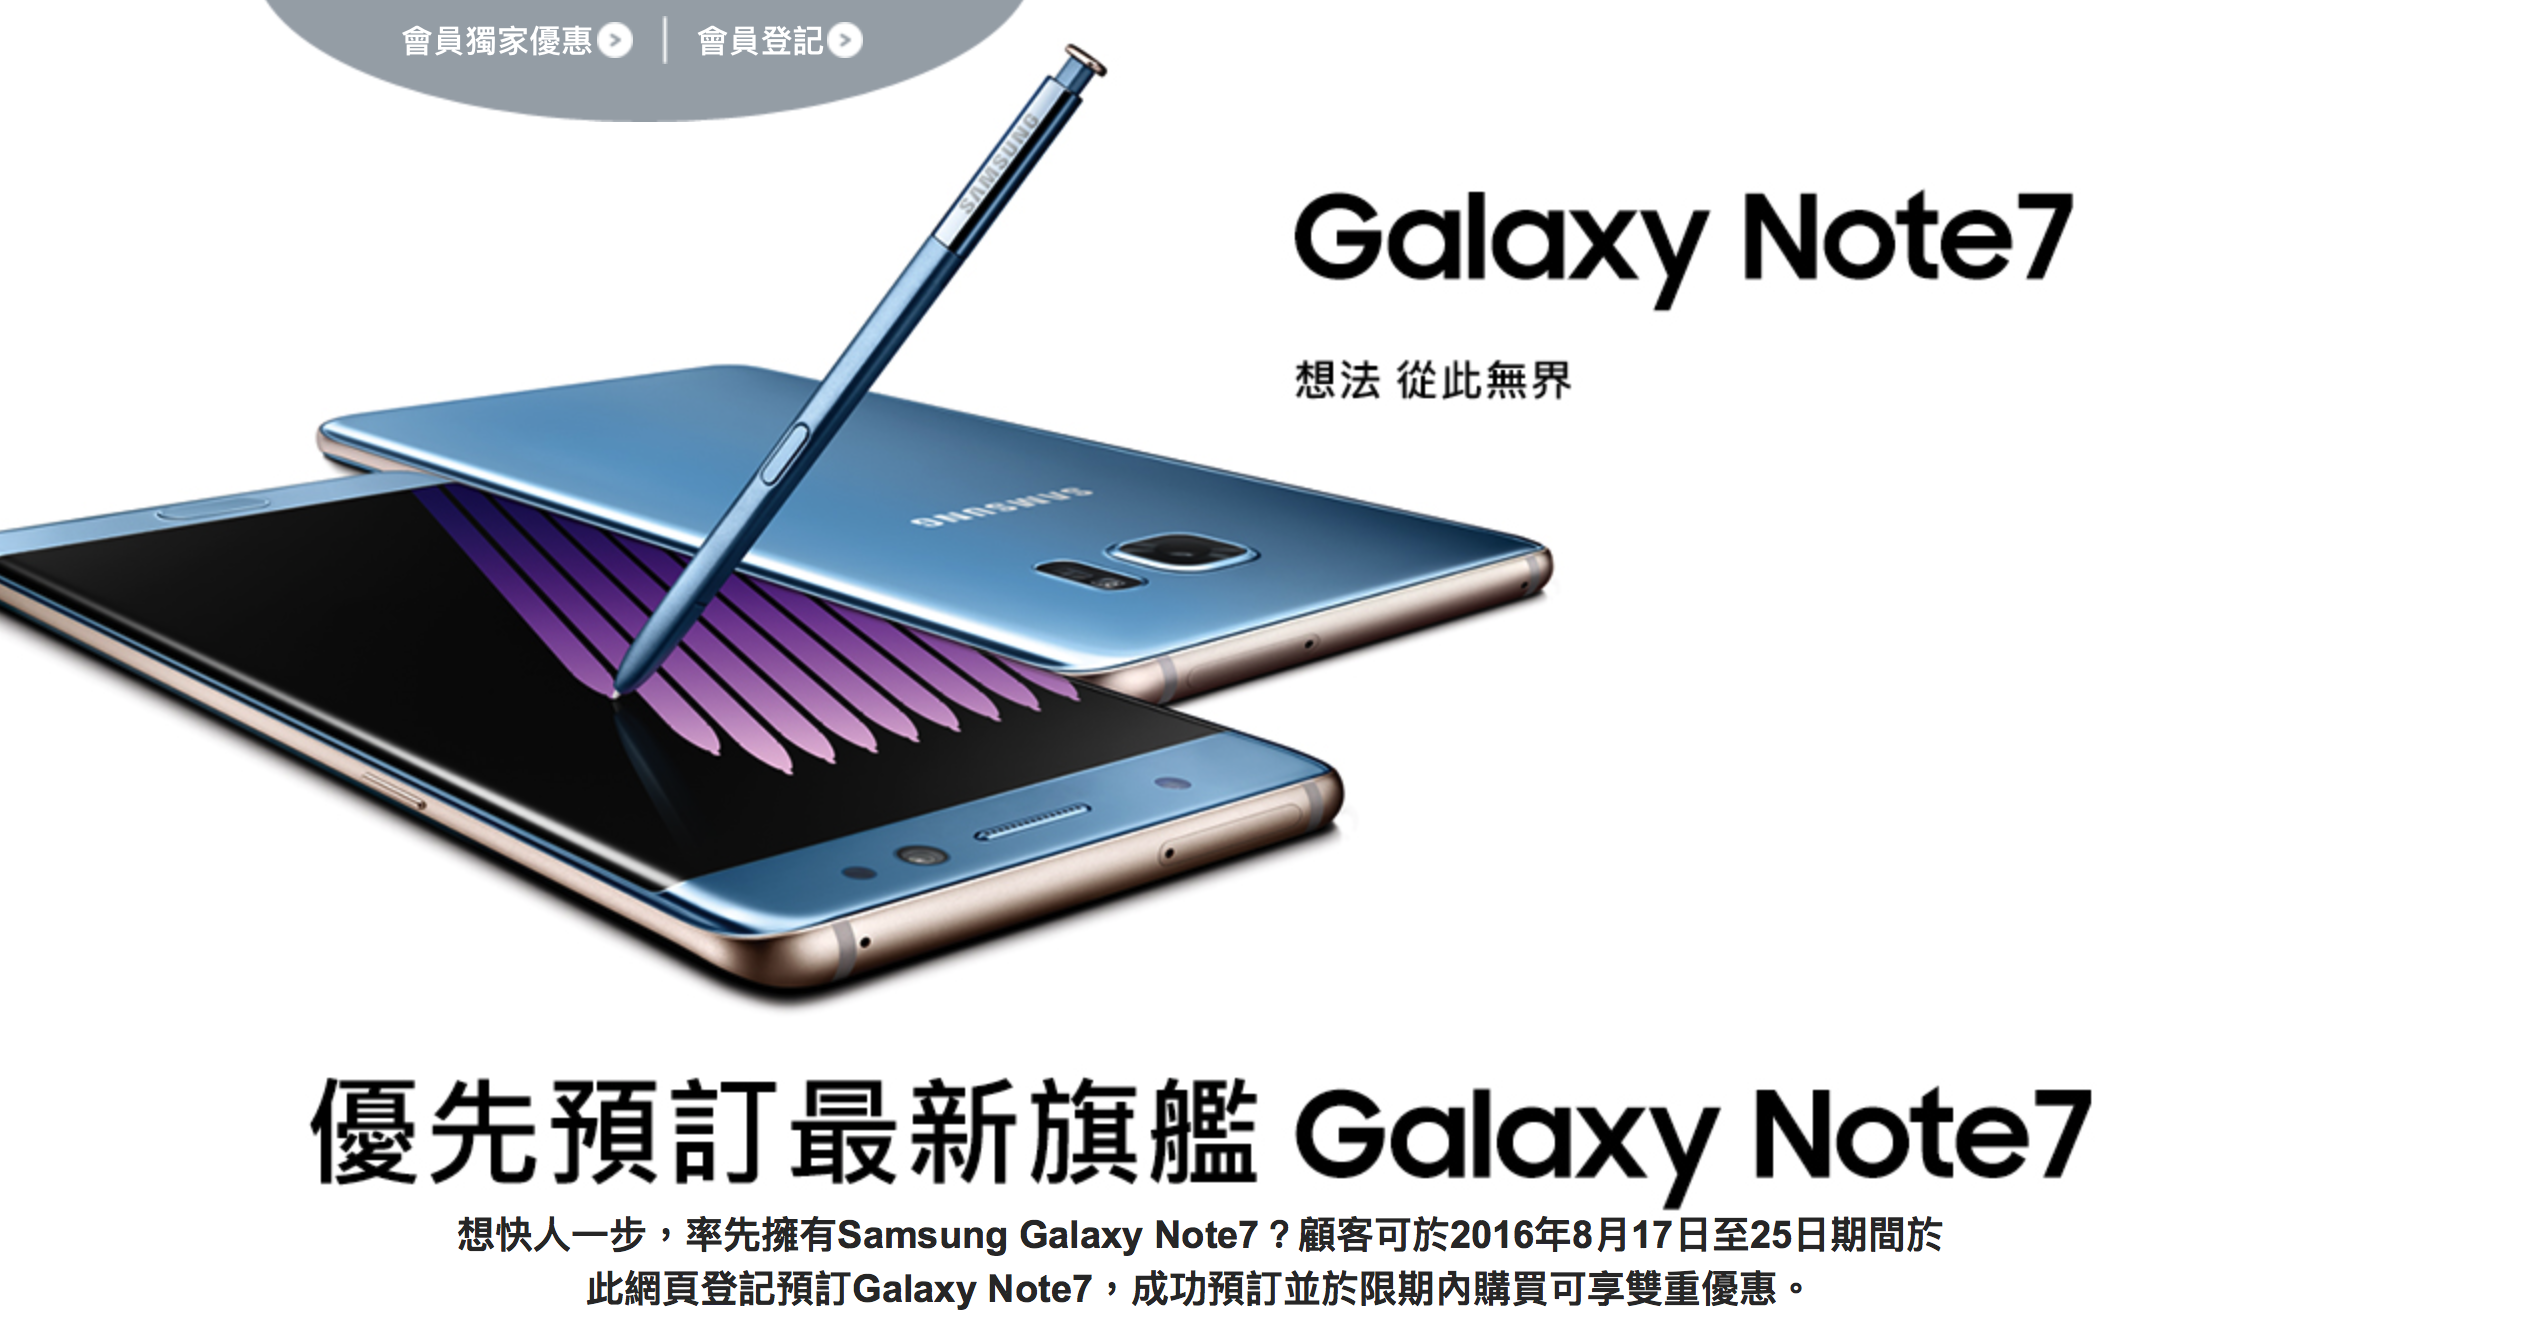 Galaxy Note 7 1 1